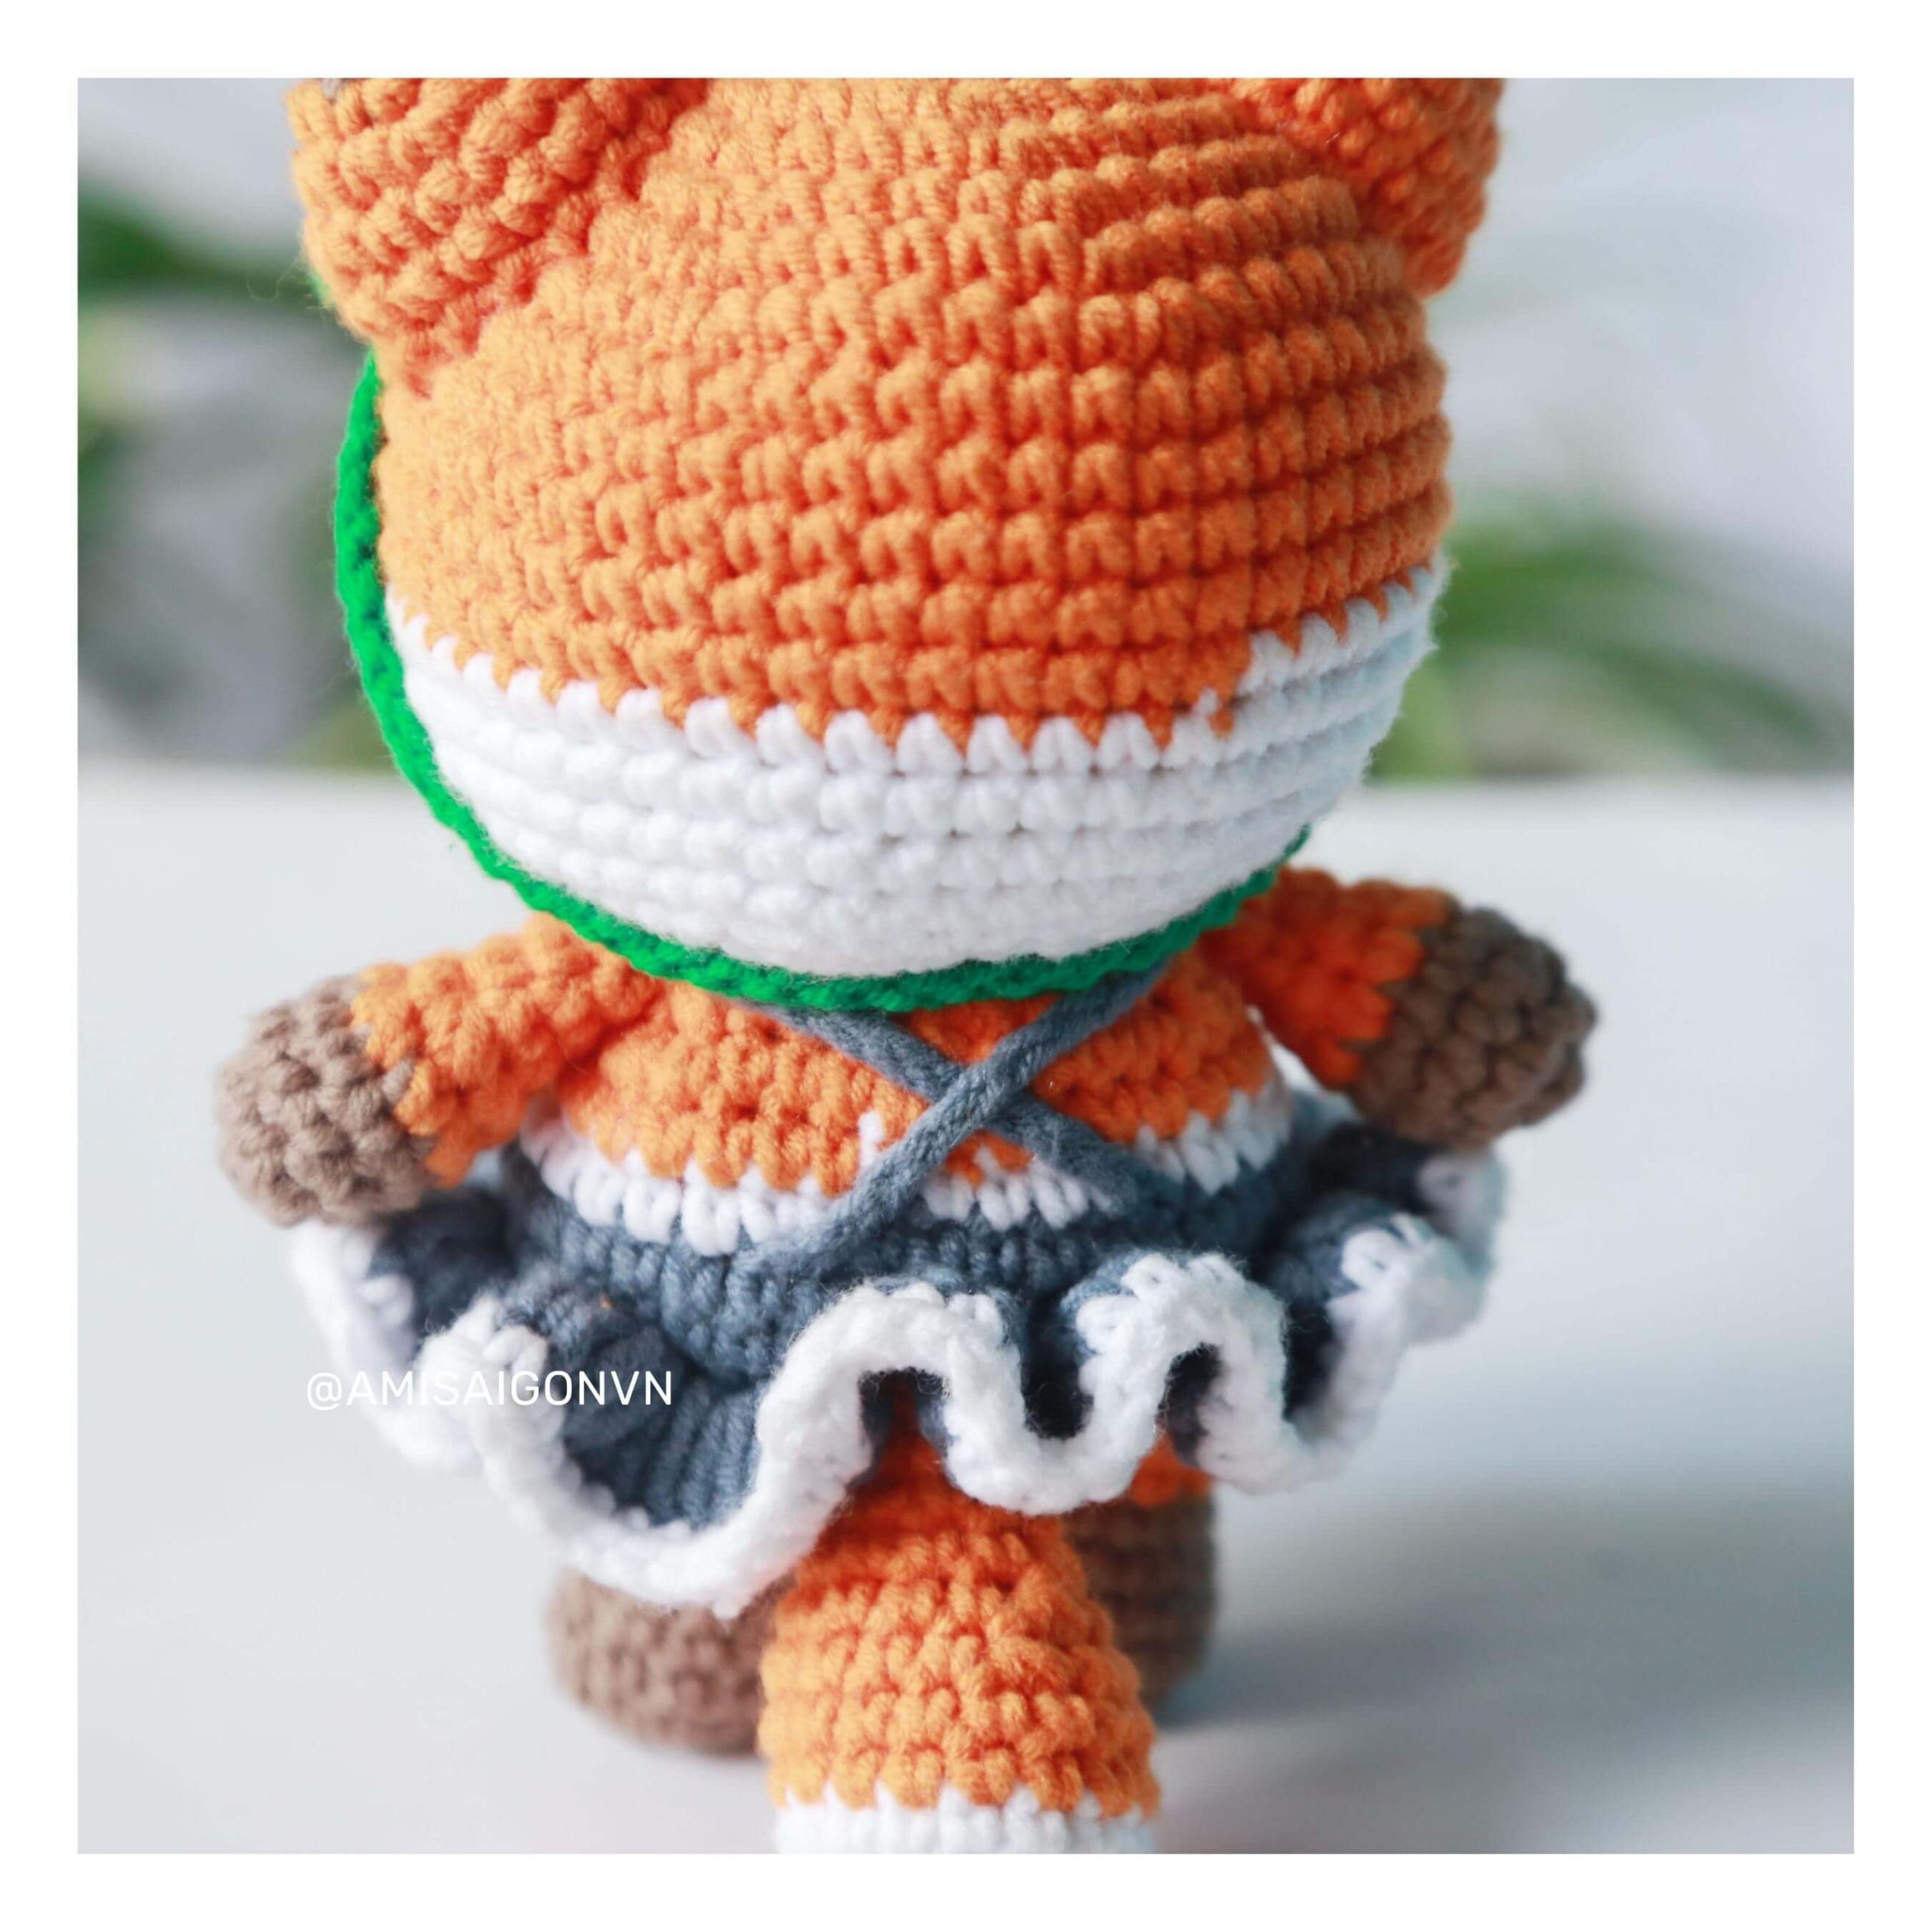 fox-amigurumi-crochet-pattern-amisaigon (10)